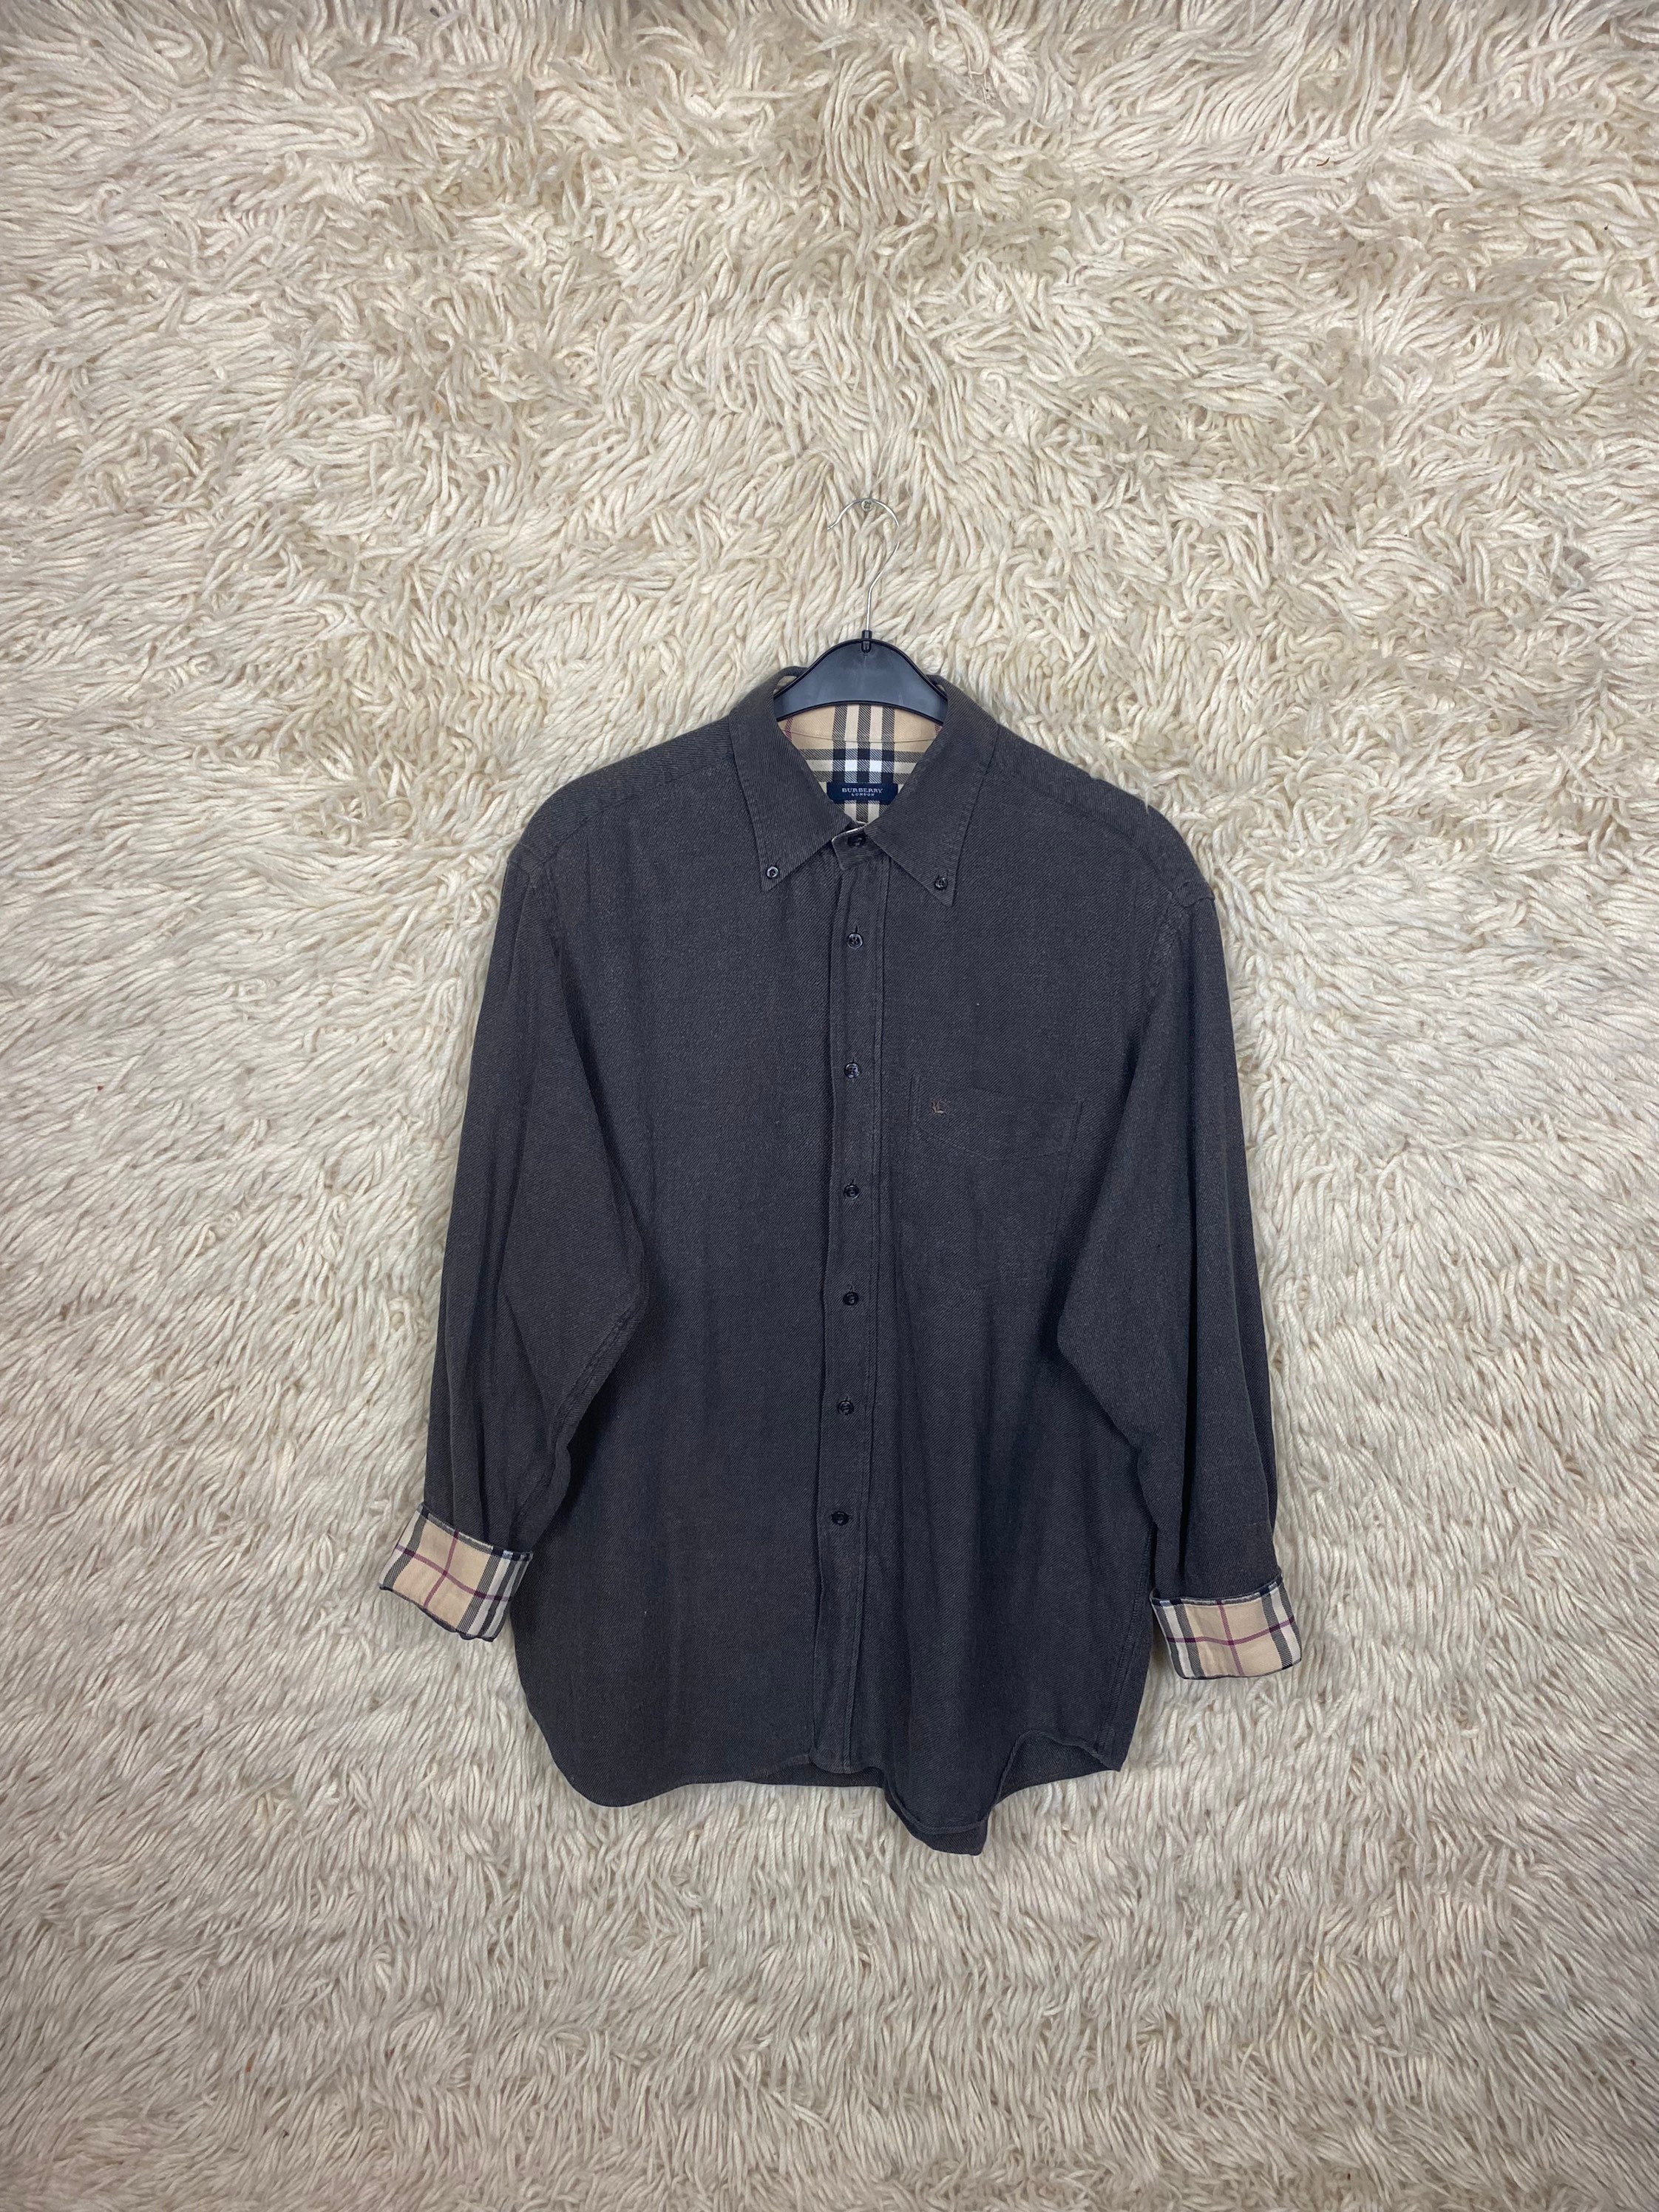 Burberry London Nova Blue Check Button Up Long Sleeve Shirt Size L Men